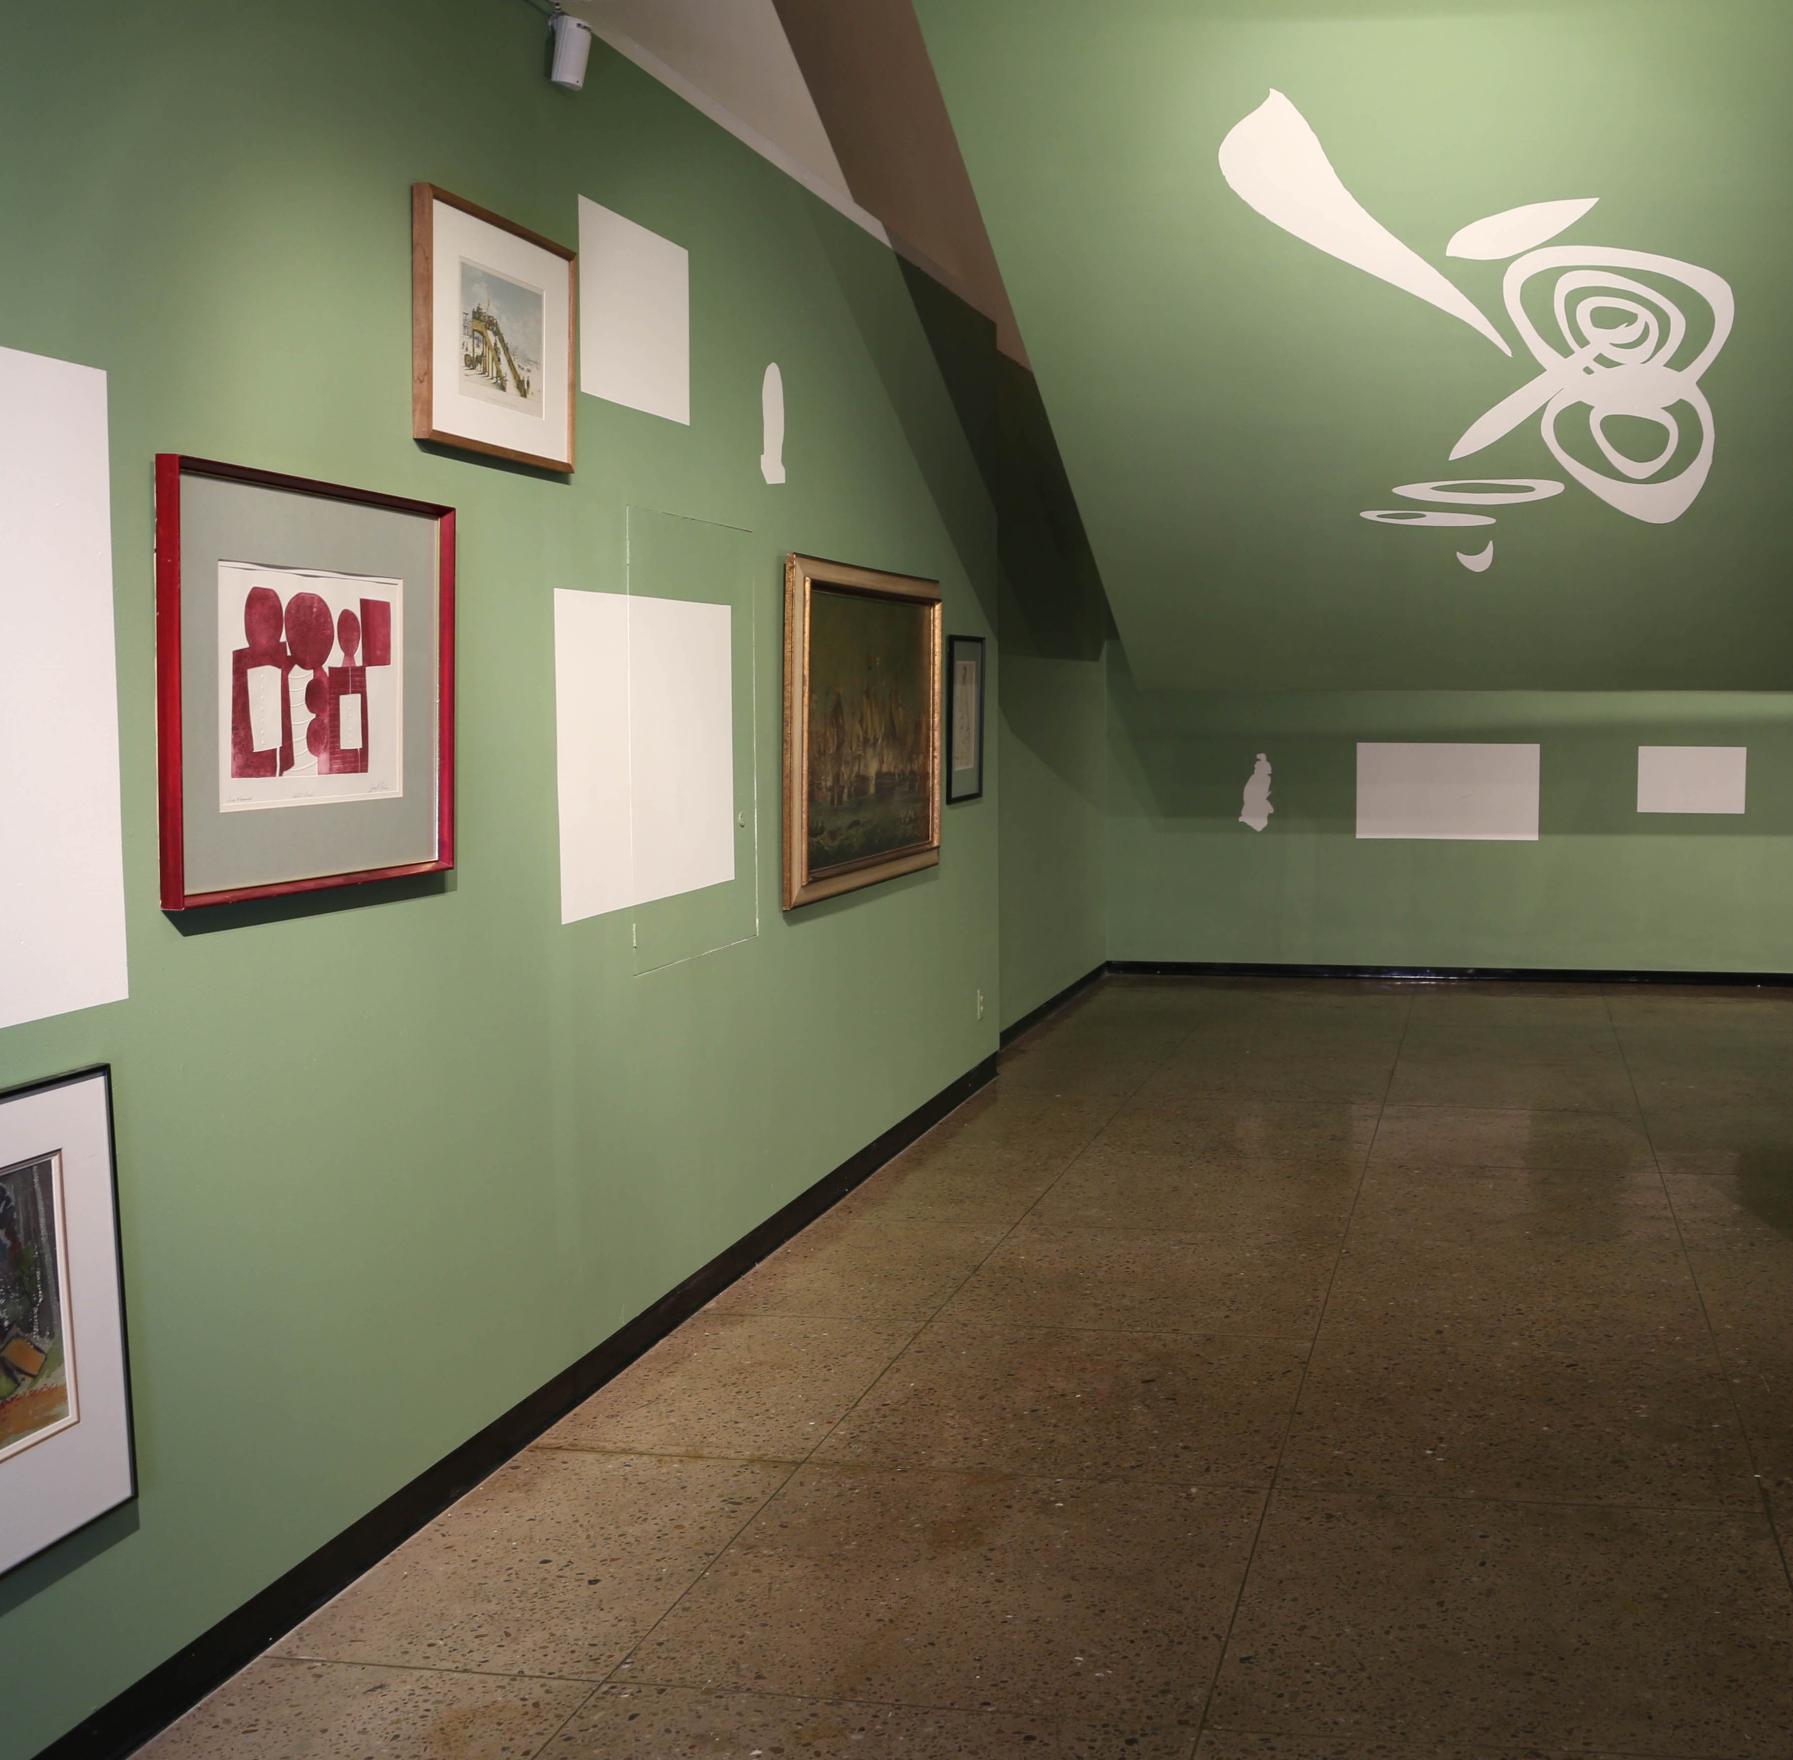 Acquired in 1964, installation, Confederation Centre Art Gallery, Charlottetown, PEI, 2014